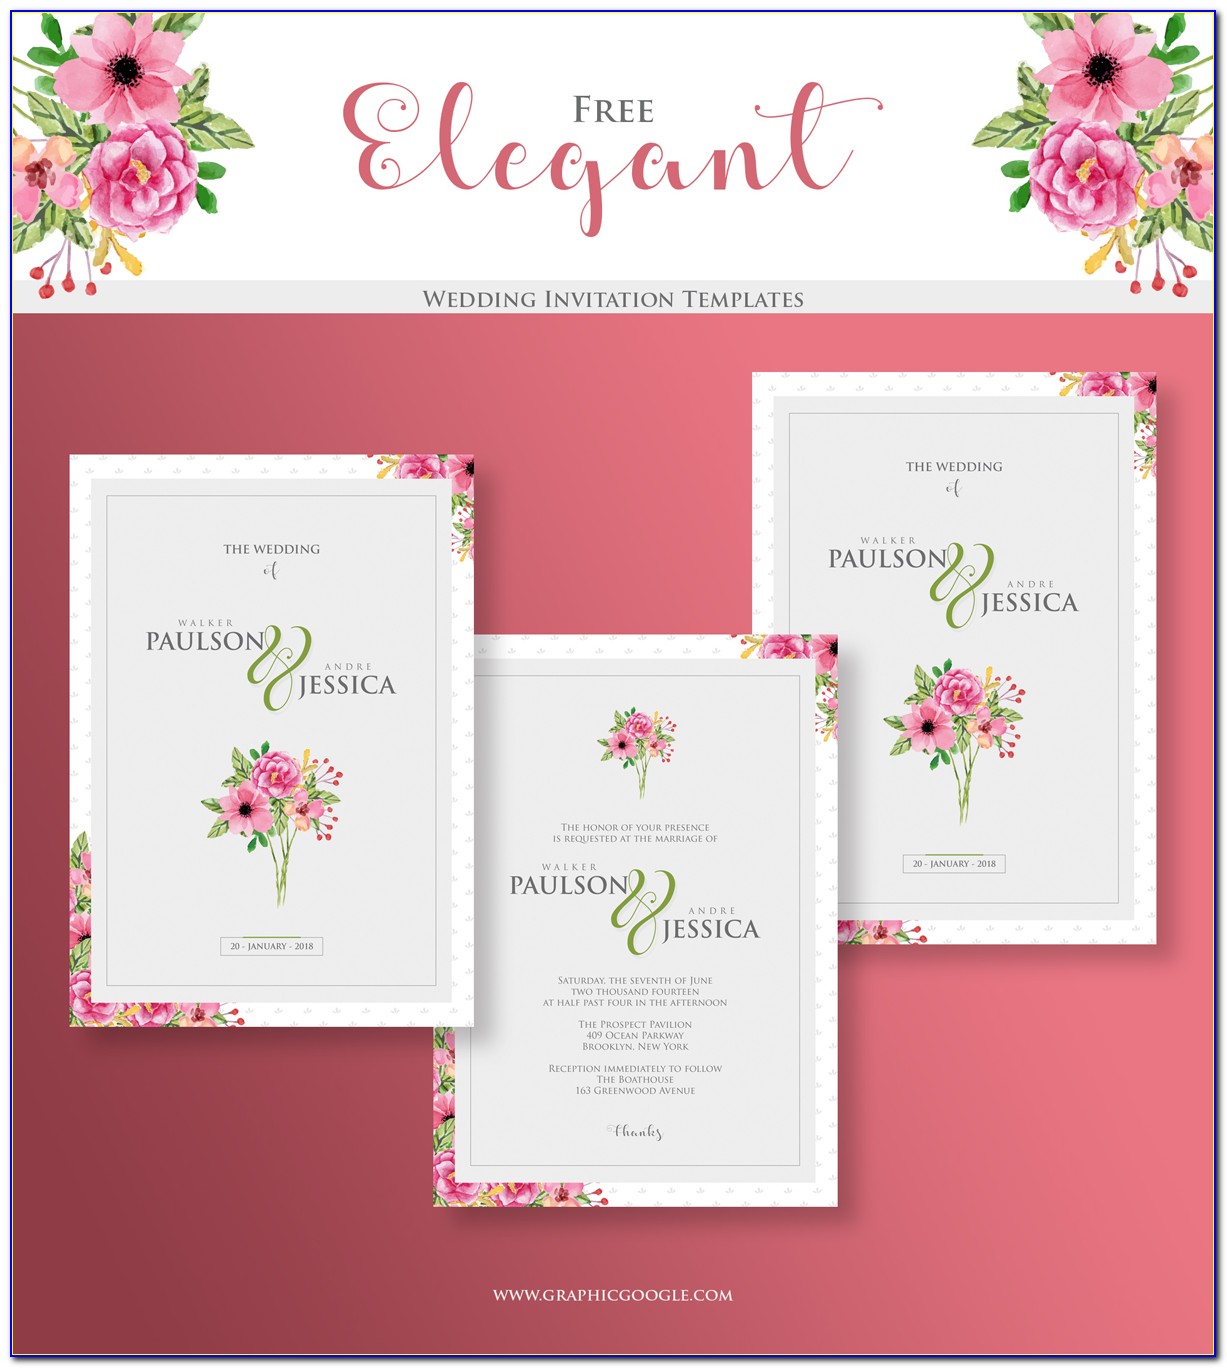 Elegant Wedding Invitation Card Template Free Download